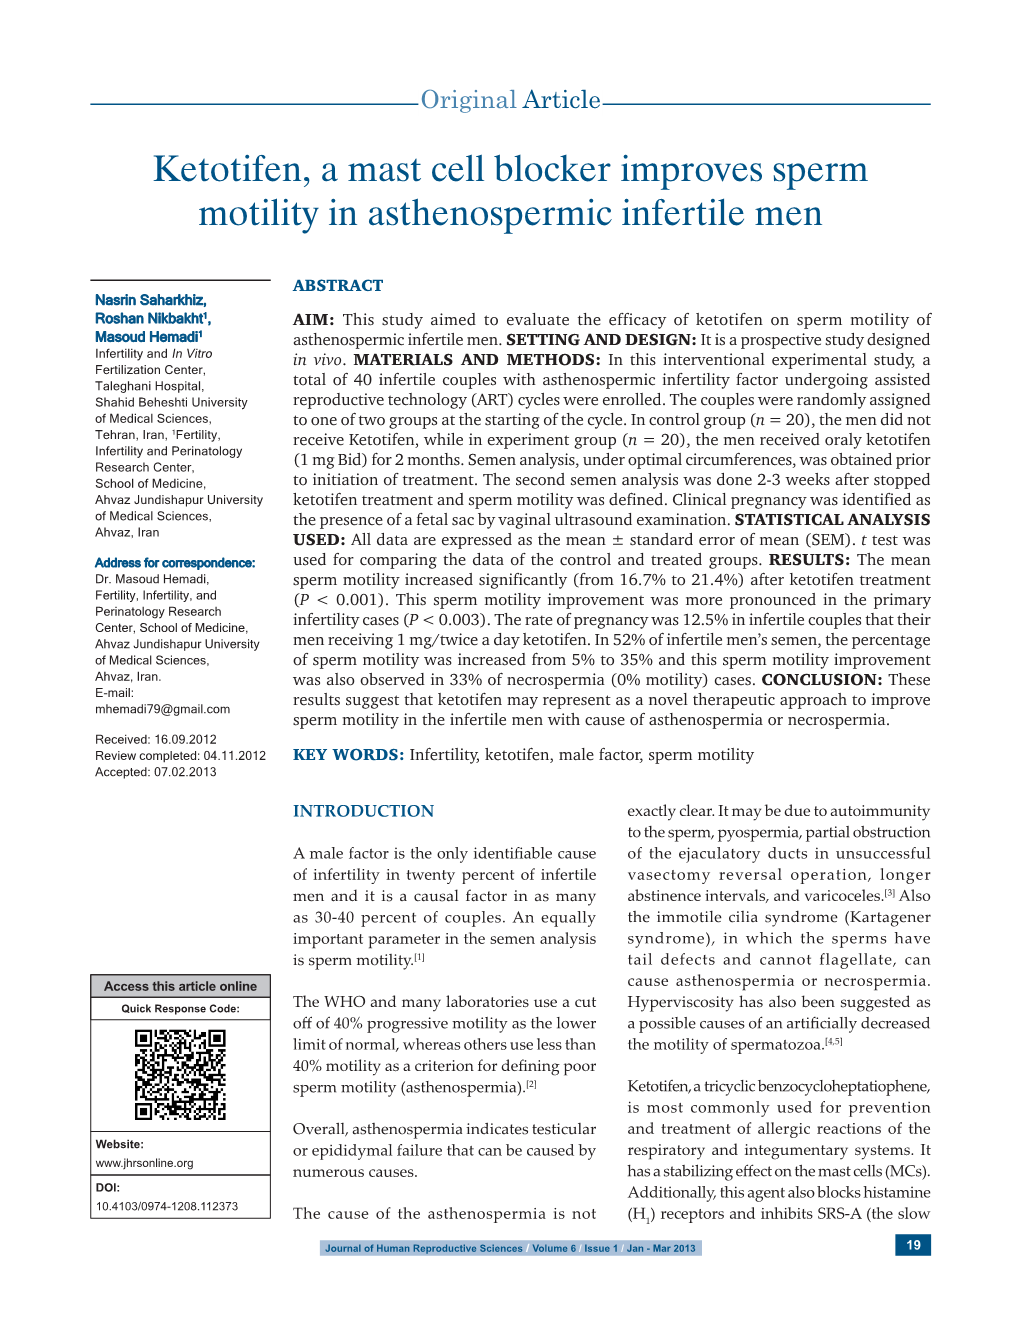 Ketotifen, a Mast Cell Blocker Improves Sperm Motility in Asthenospermic Infertile Men